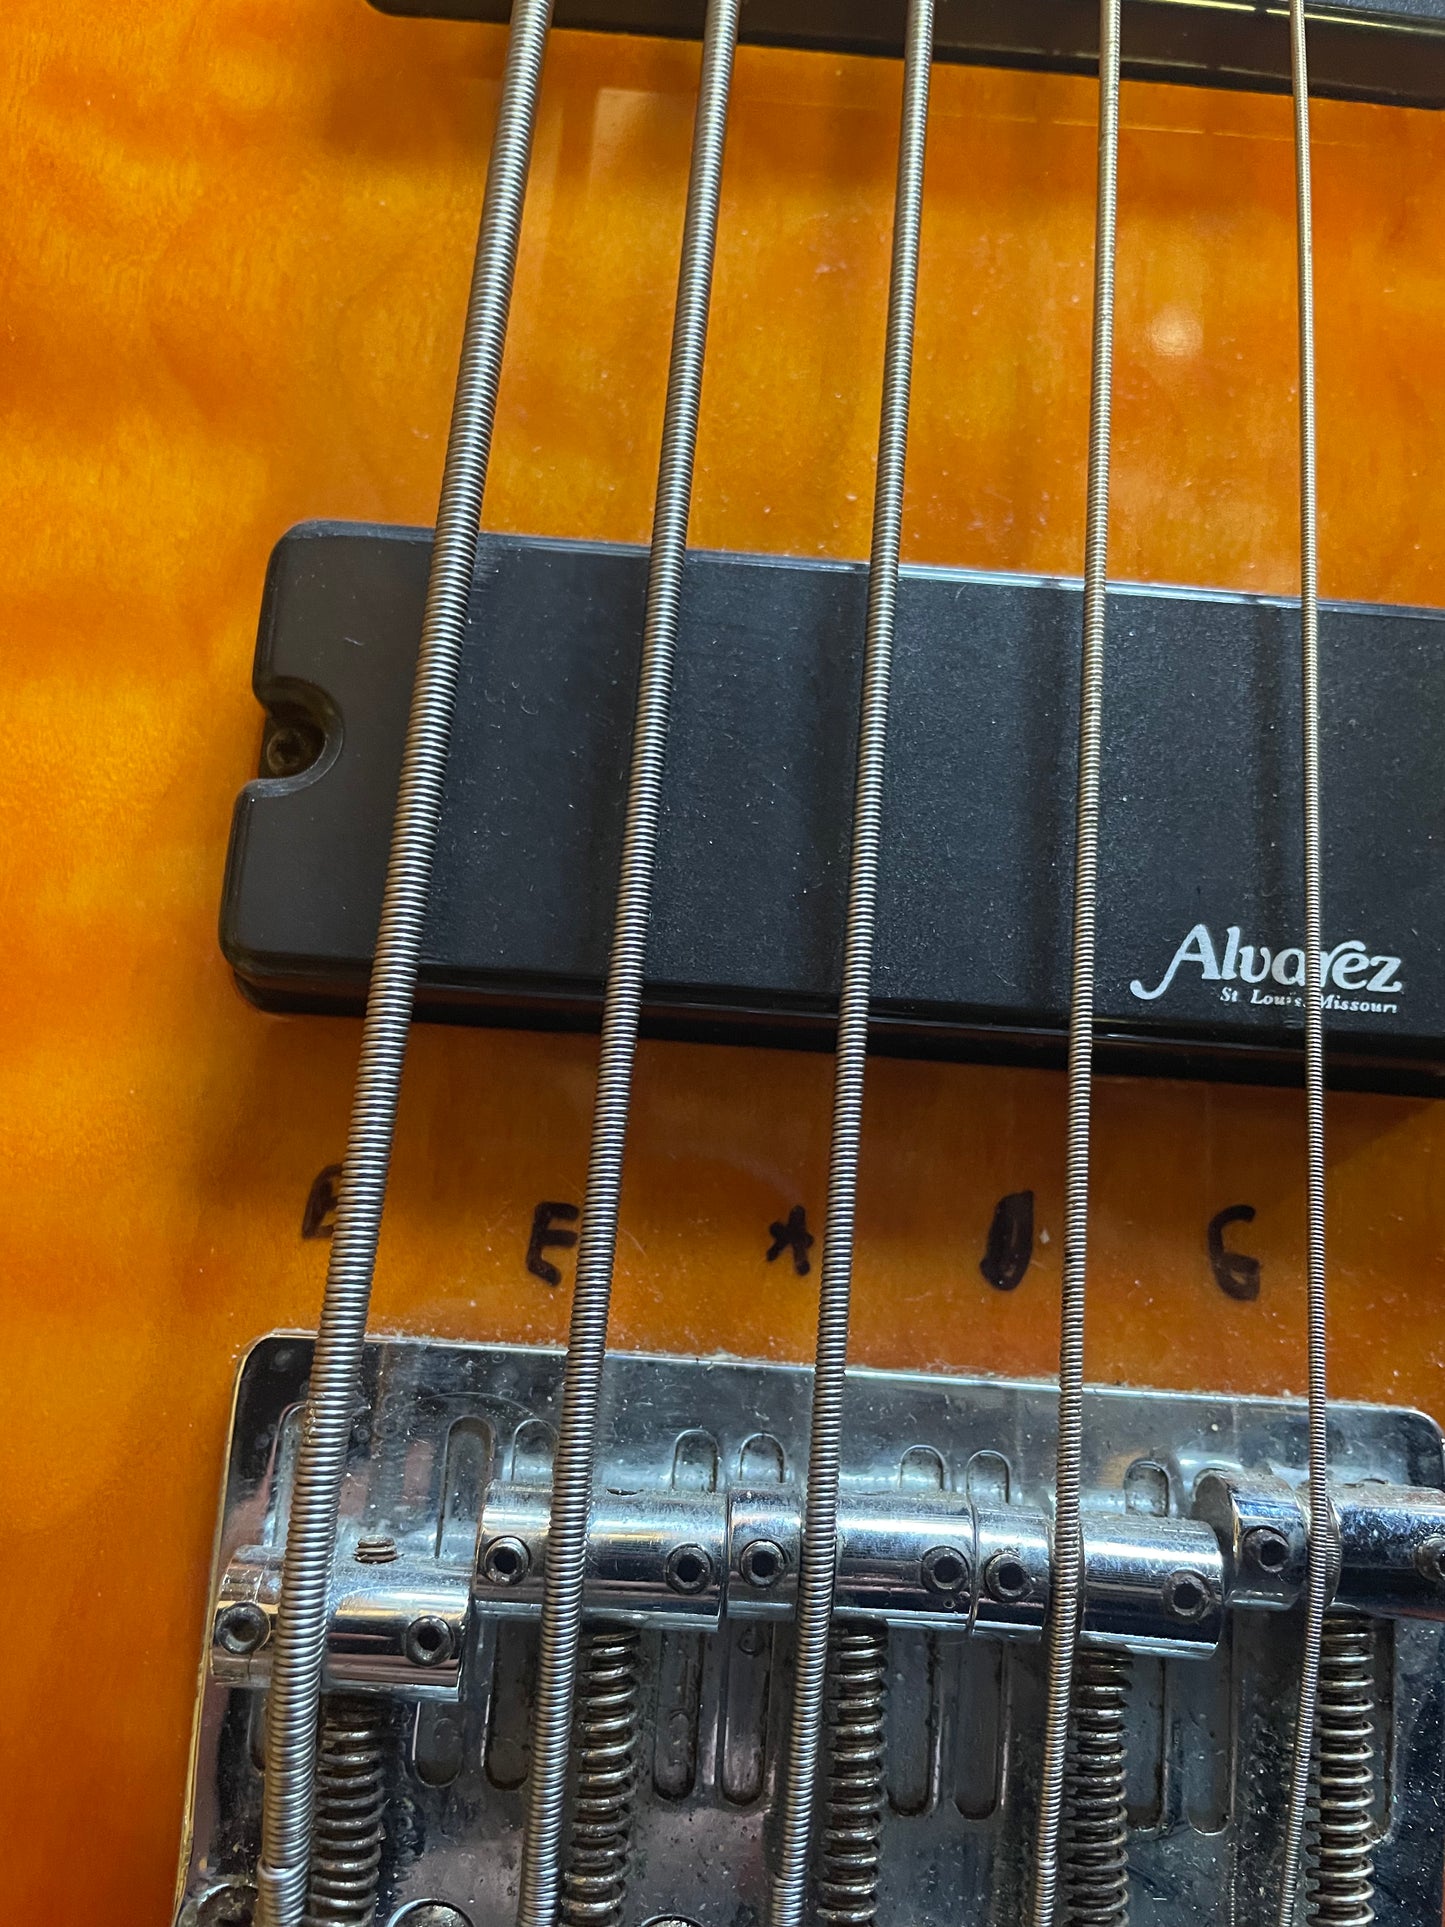 2004 Alvarez 5 String Bass - Sunburst (USED)